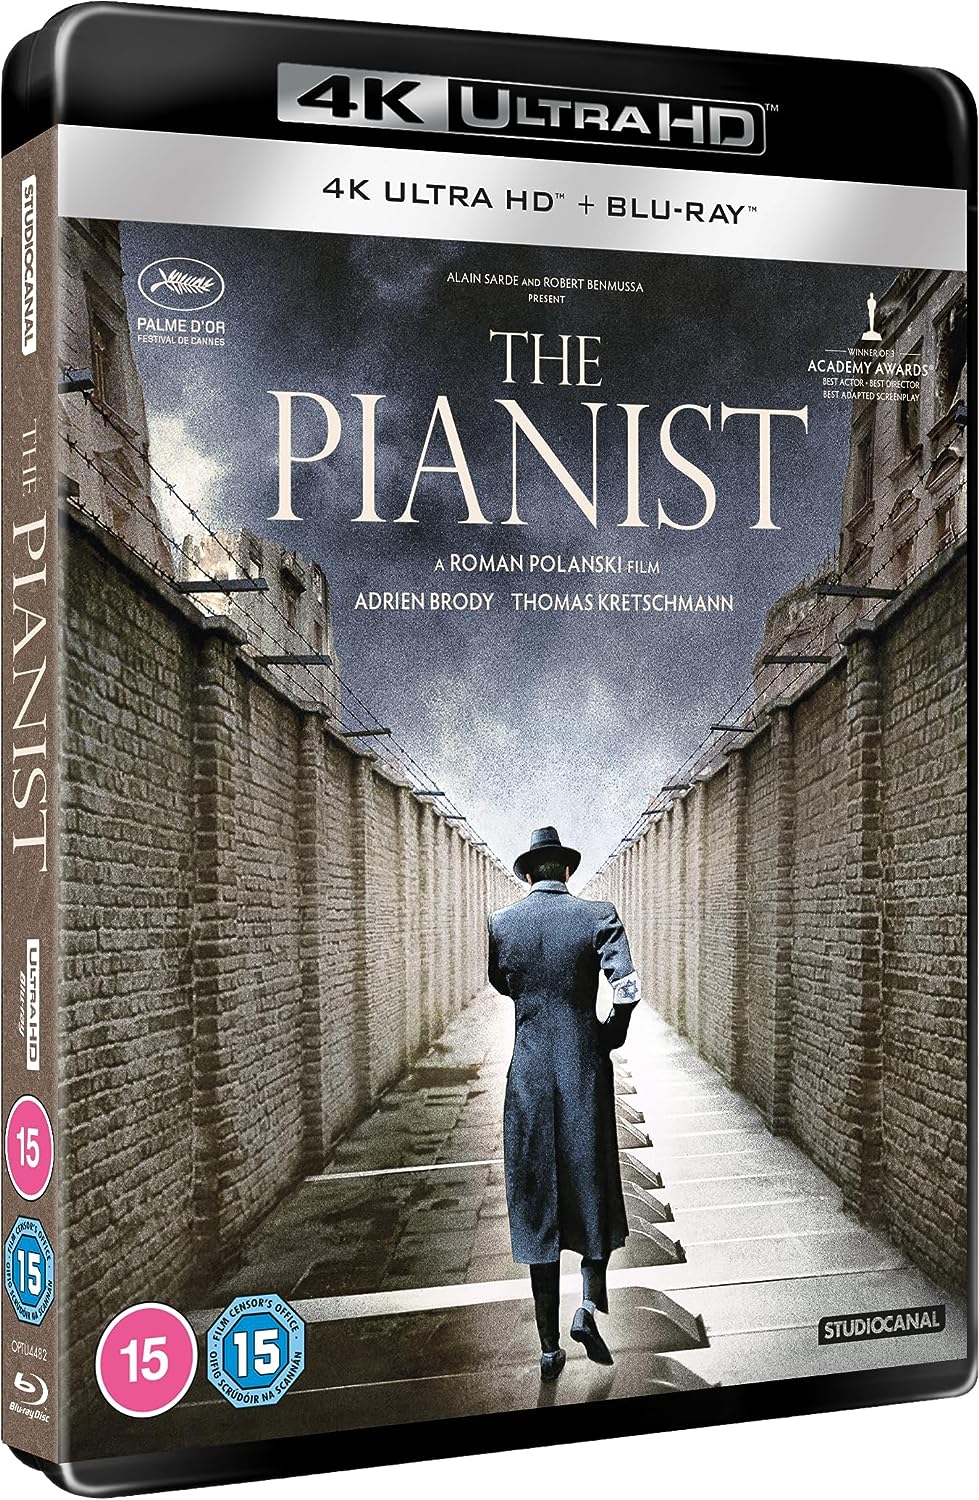 The Pianist 4K UHD + Blu-ray with Slipcover (StudioCanal UK/Region Free/B)